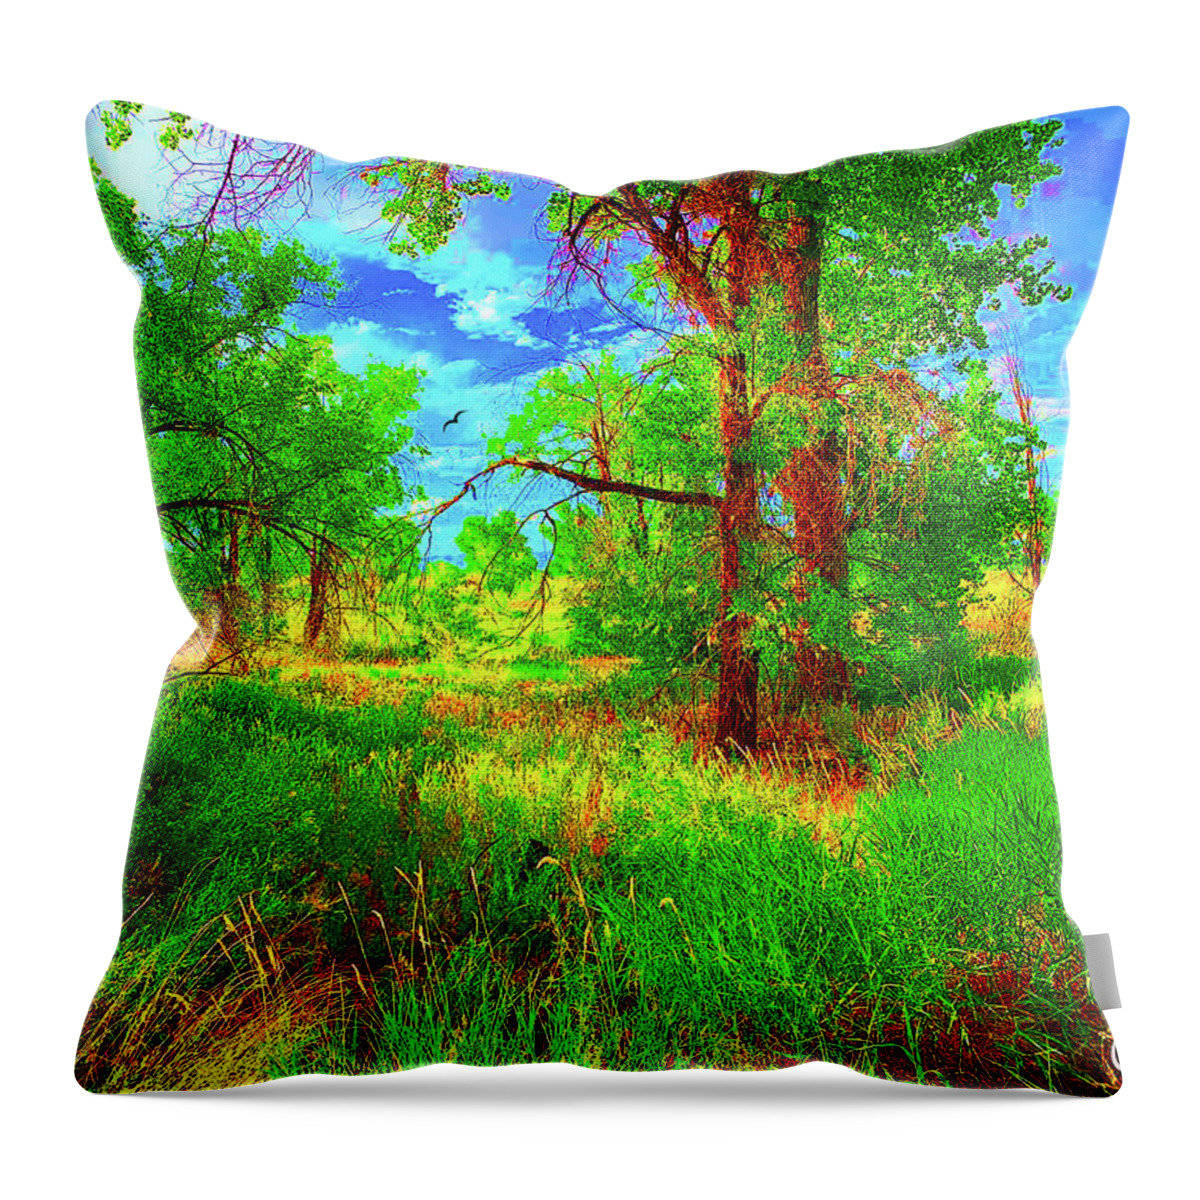 Trees Throw Pillow featuring the digital art Summer Fields by CHAZ Daugherty